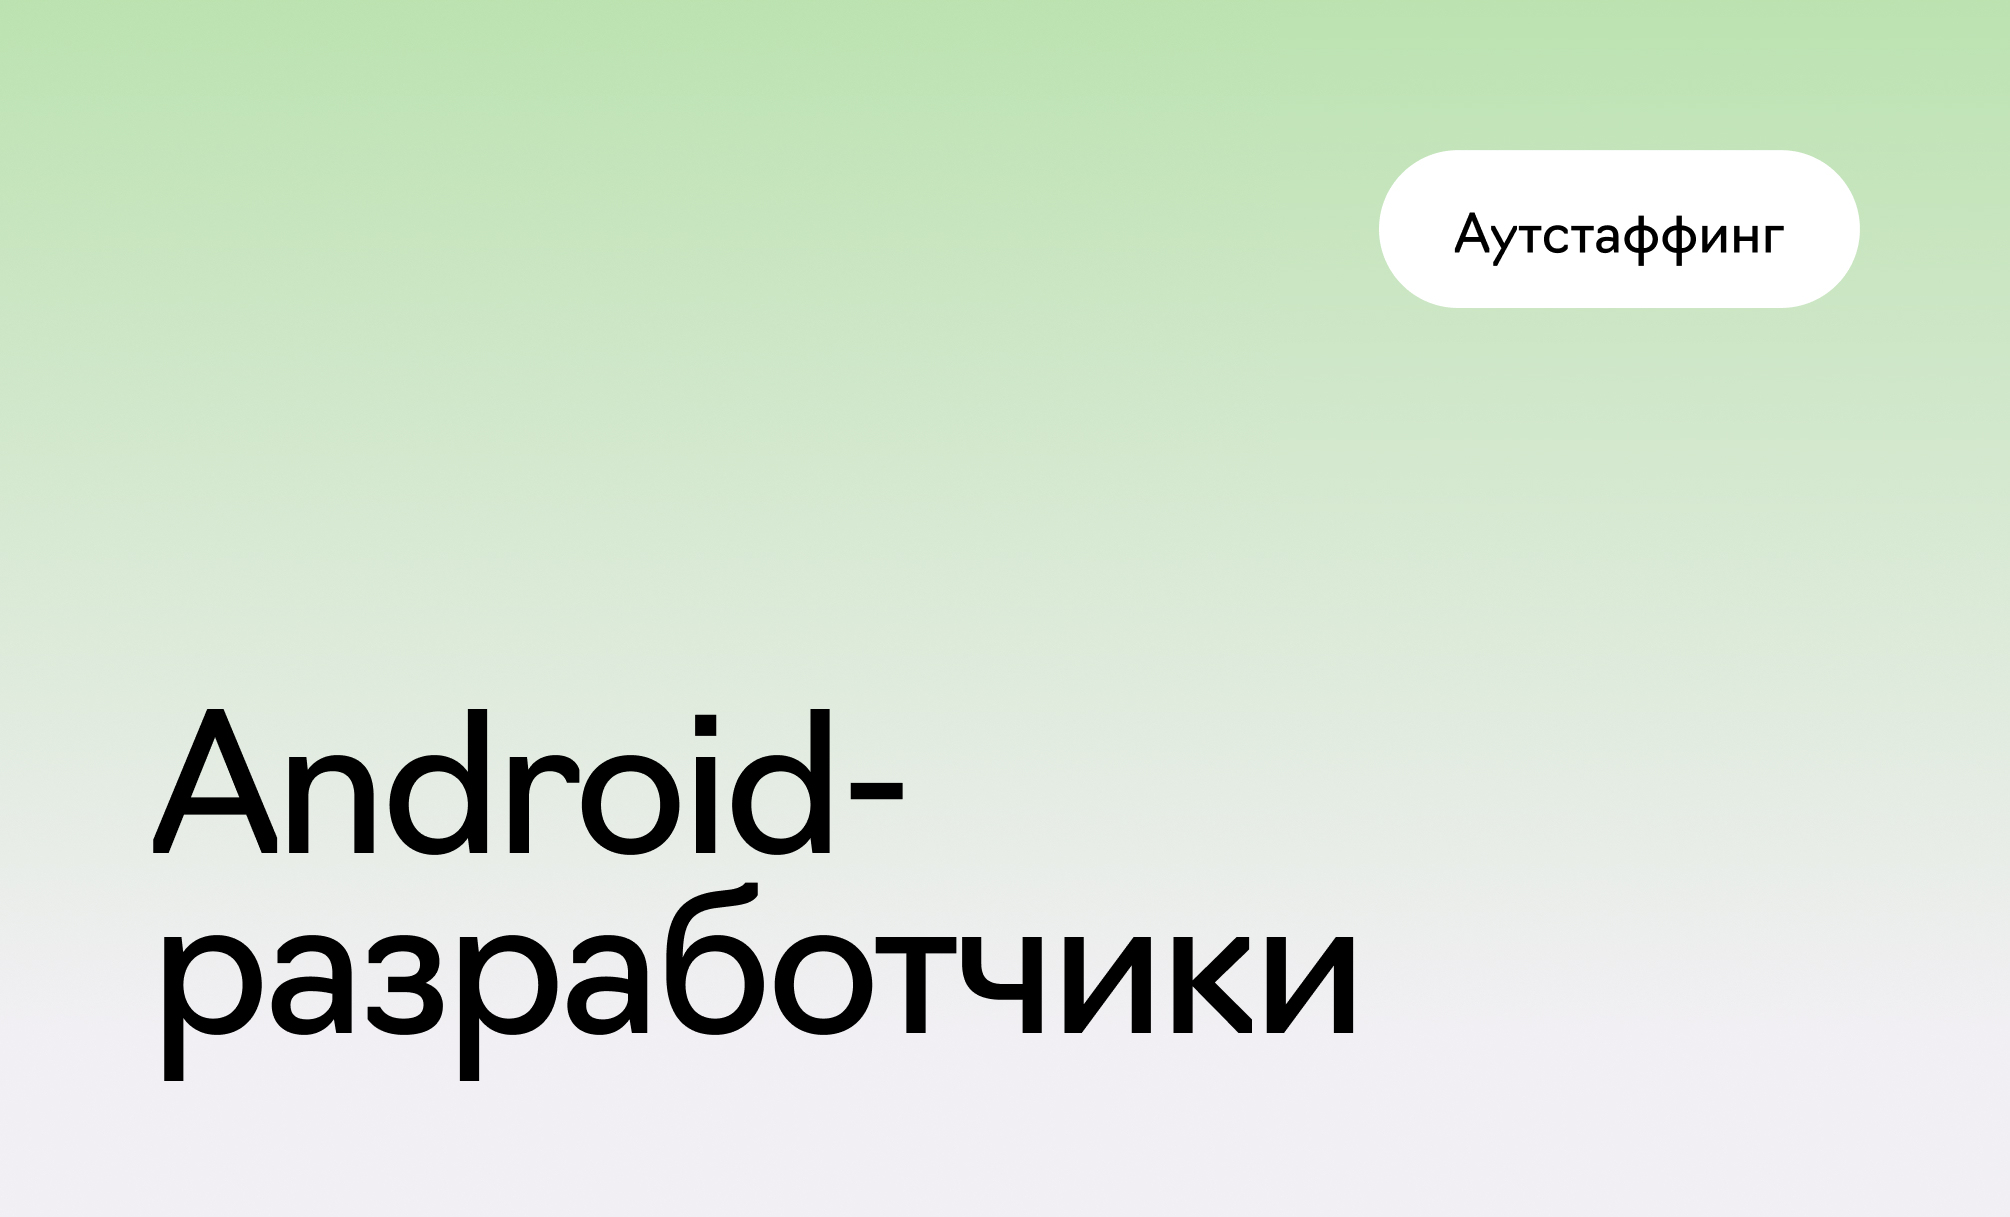 Android-разработчики на аутстафф, фотография 1